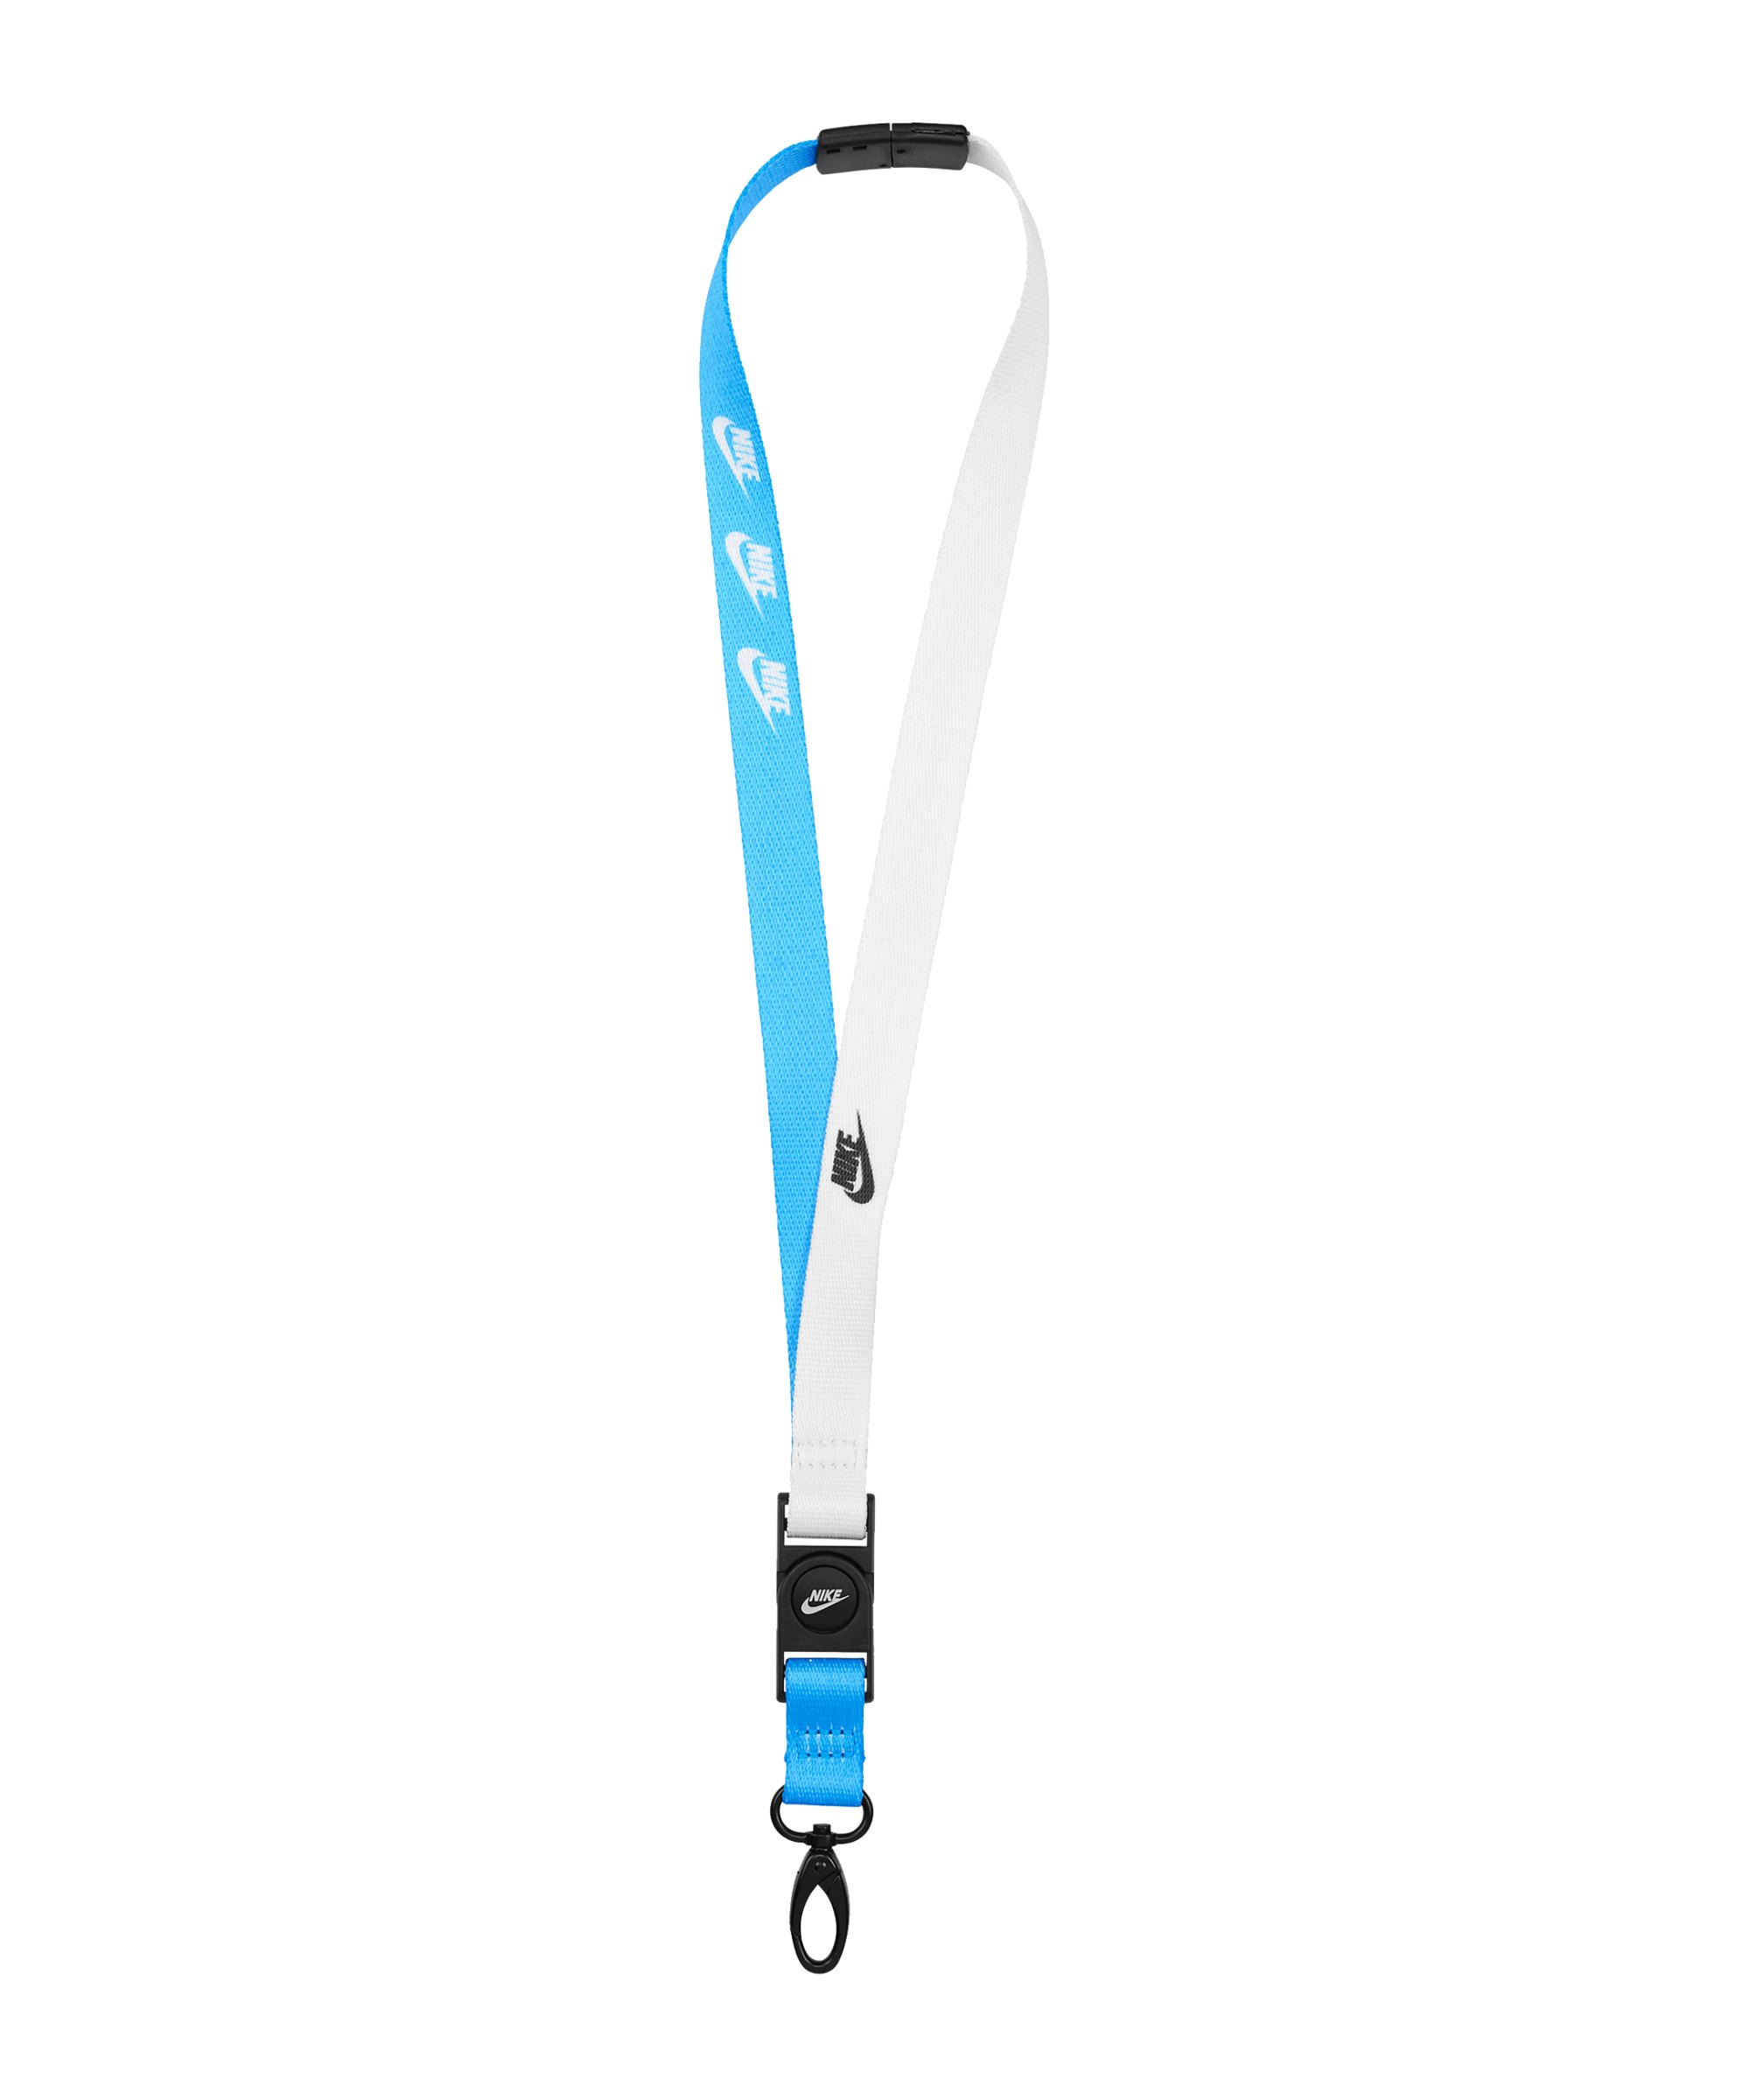 Nike Premium NSW Schlüsselband Blau F403 - blau